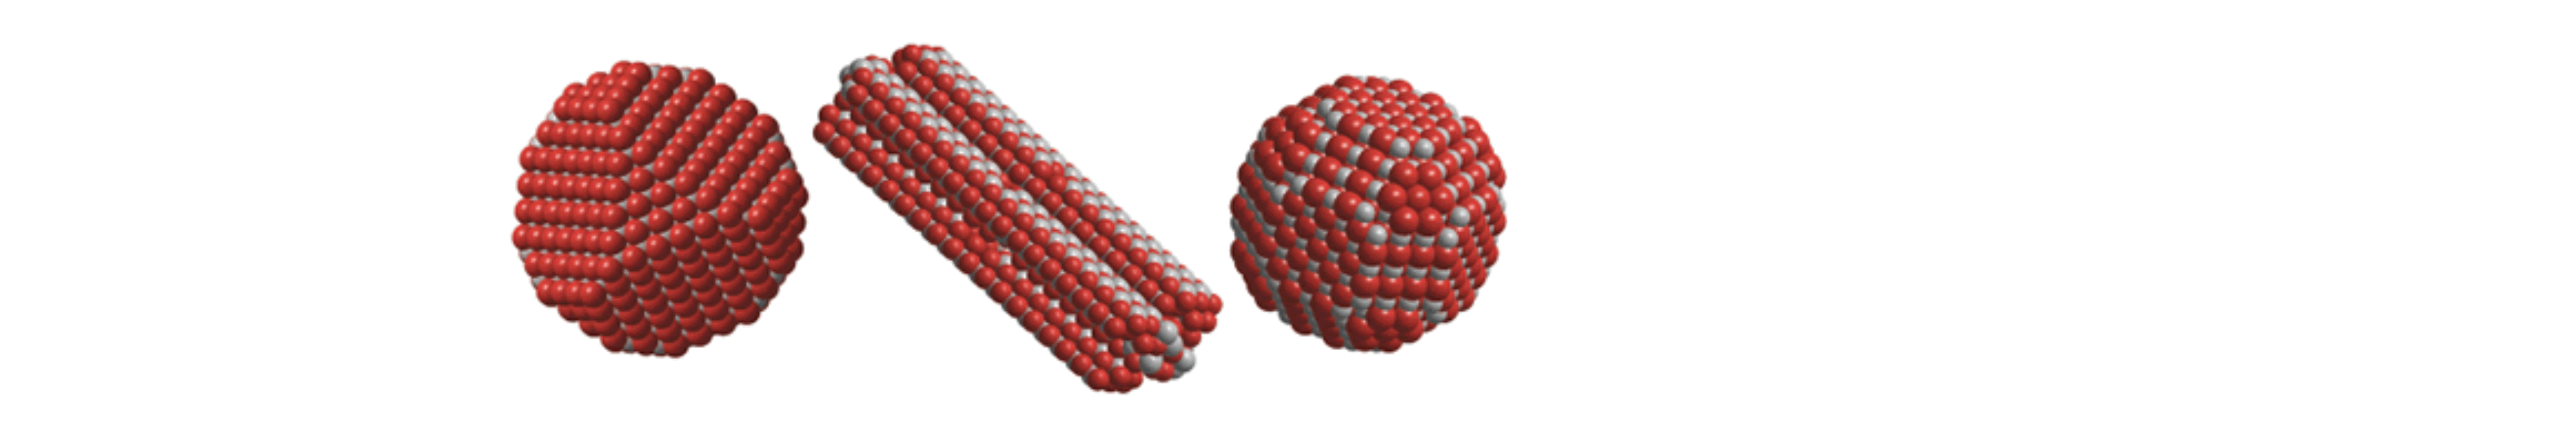 Prospects of Nanoscience with Nanocrystals